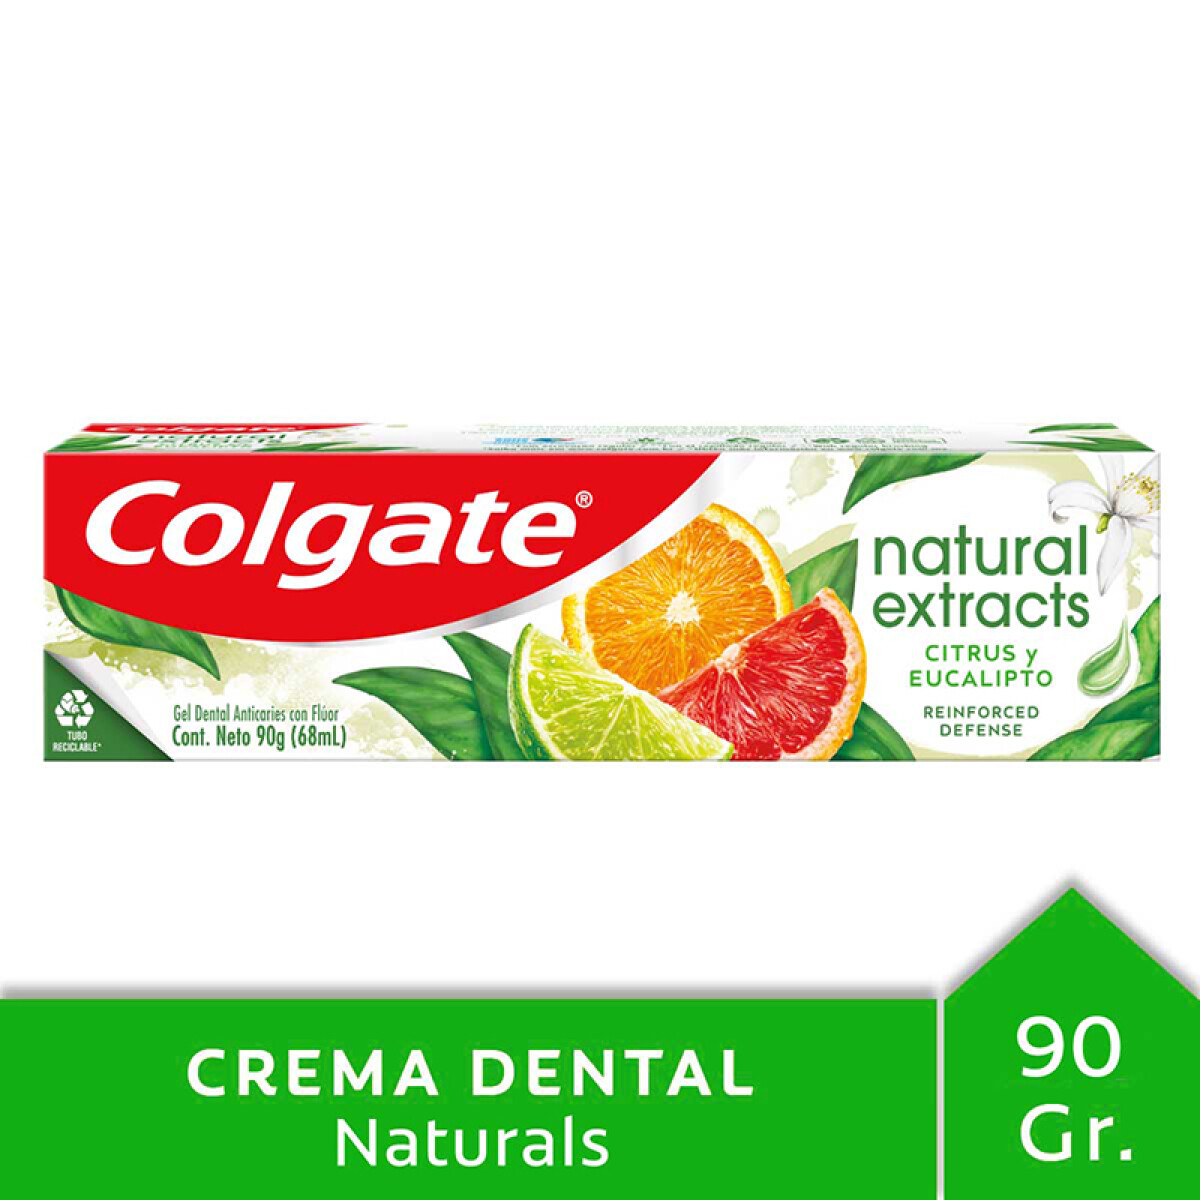 Colgate crema dental natural extracts 90 g - Citrus y eucalipto 